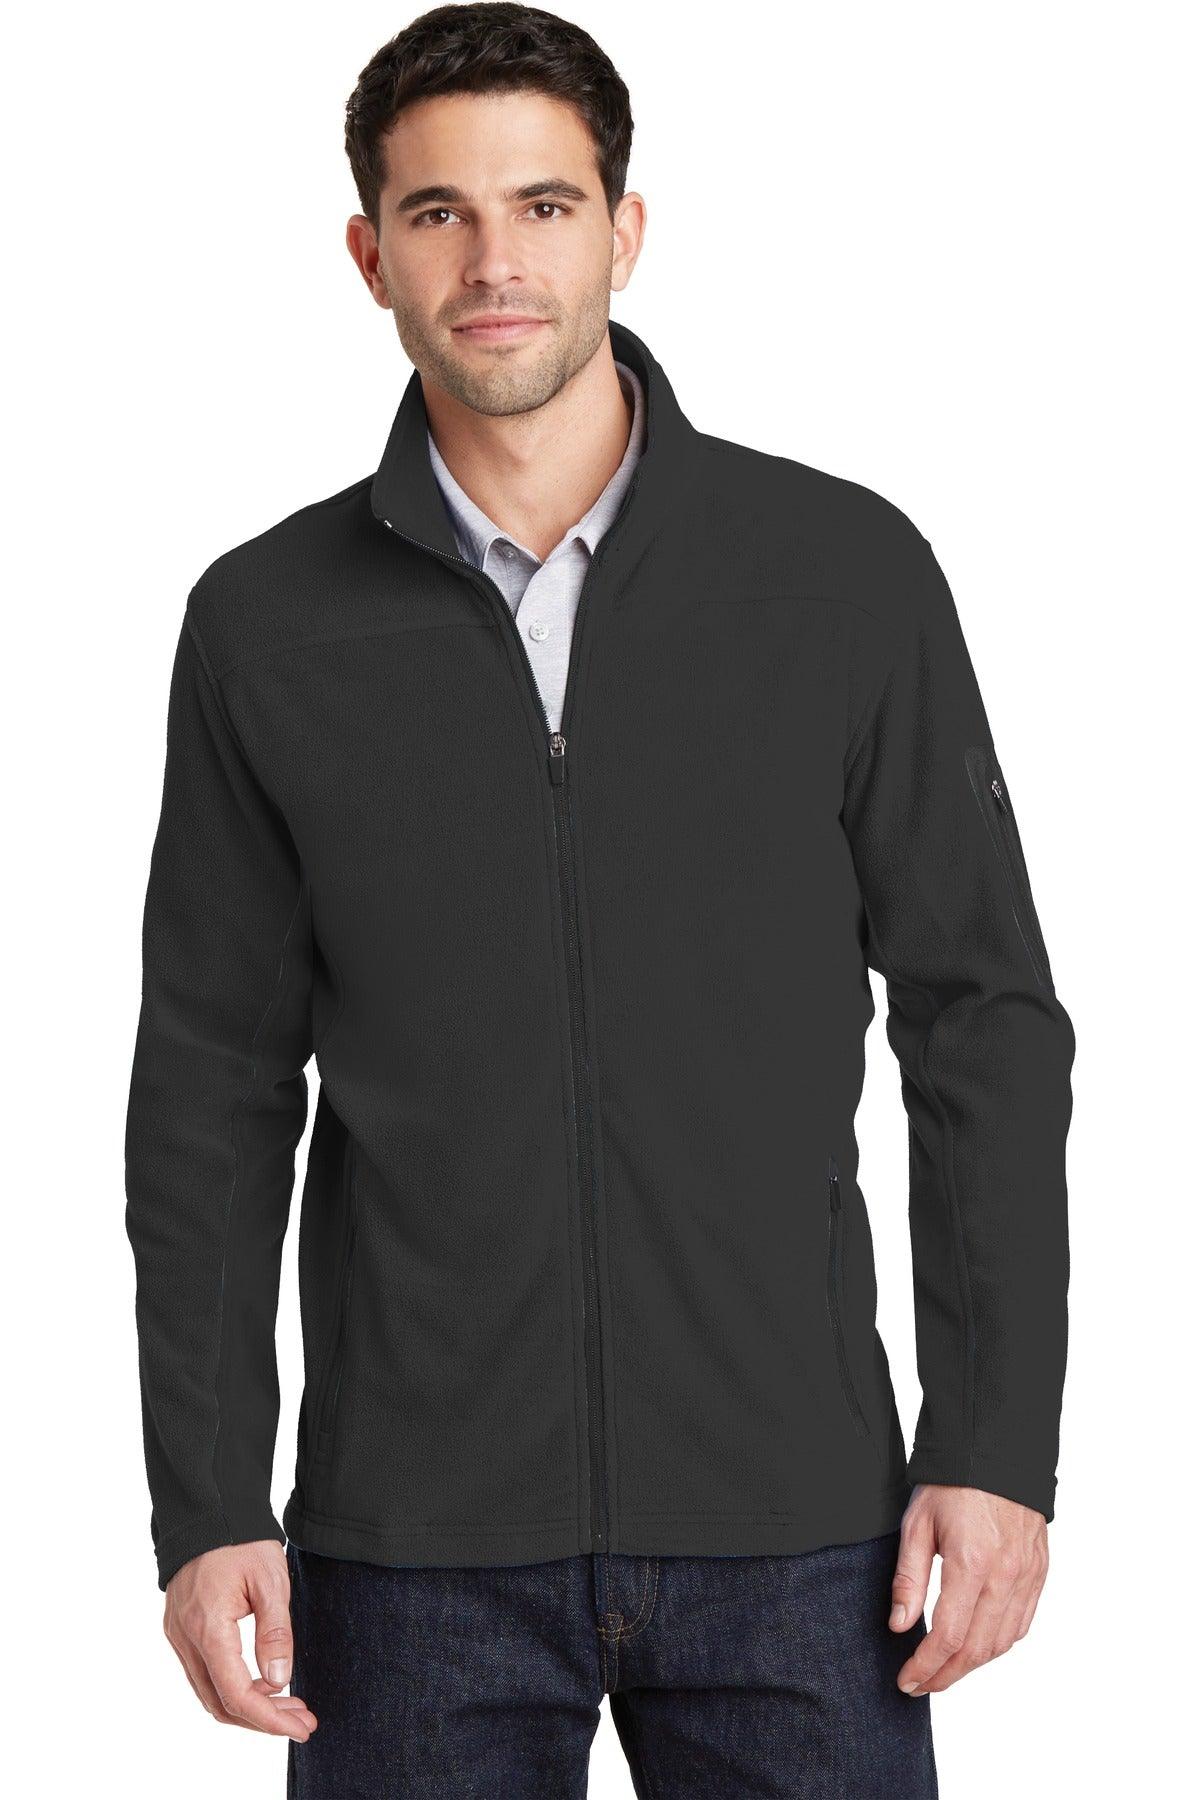 Port Authority Summit Fleece Full-Zip Jacket. F233 - Dresses Max